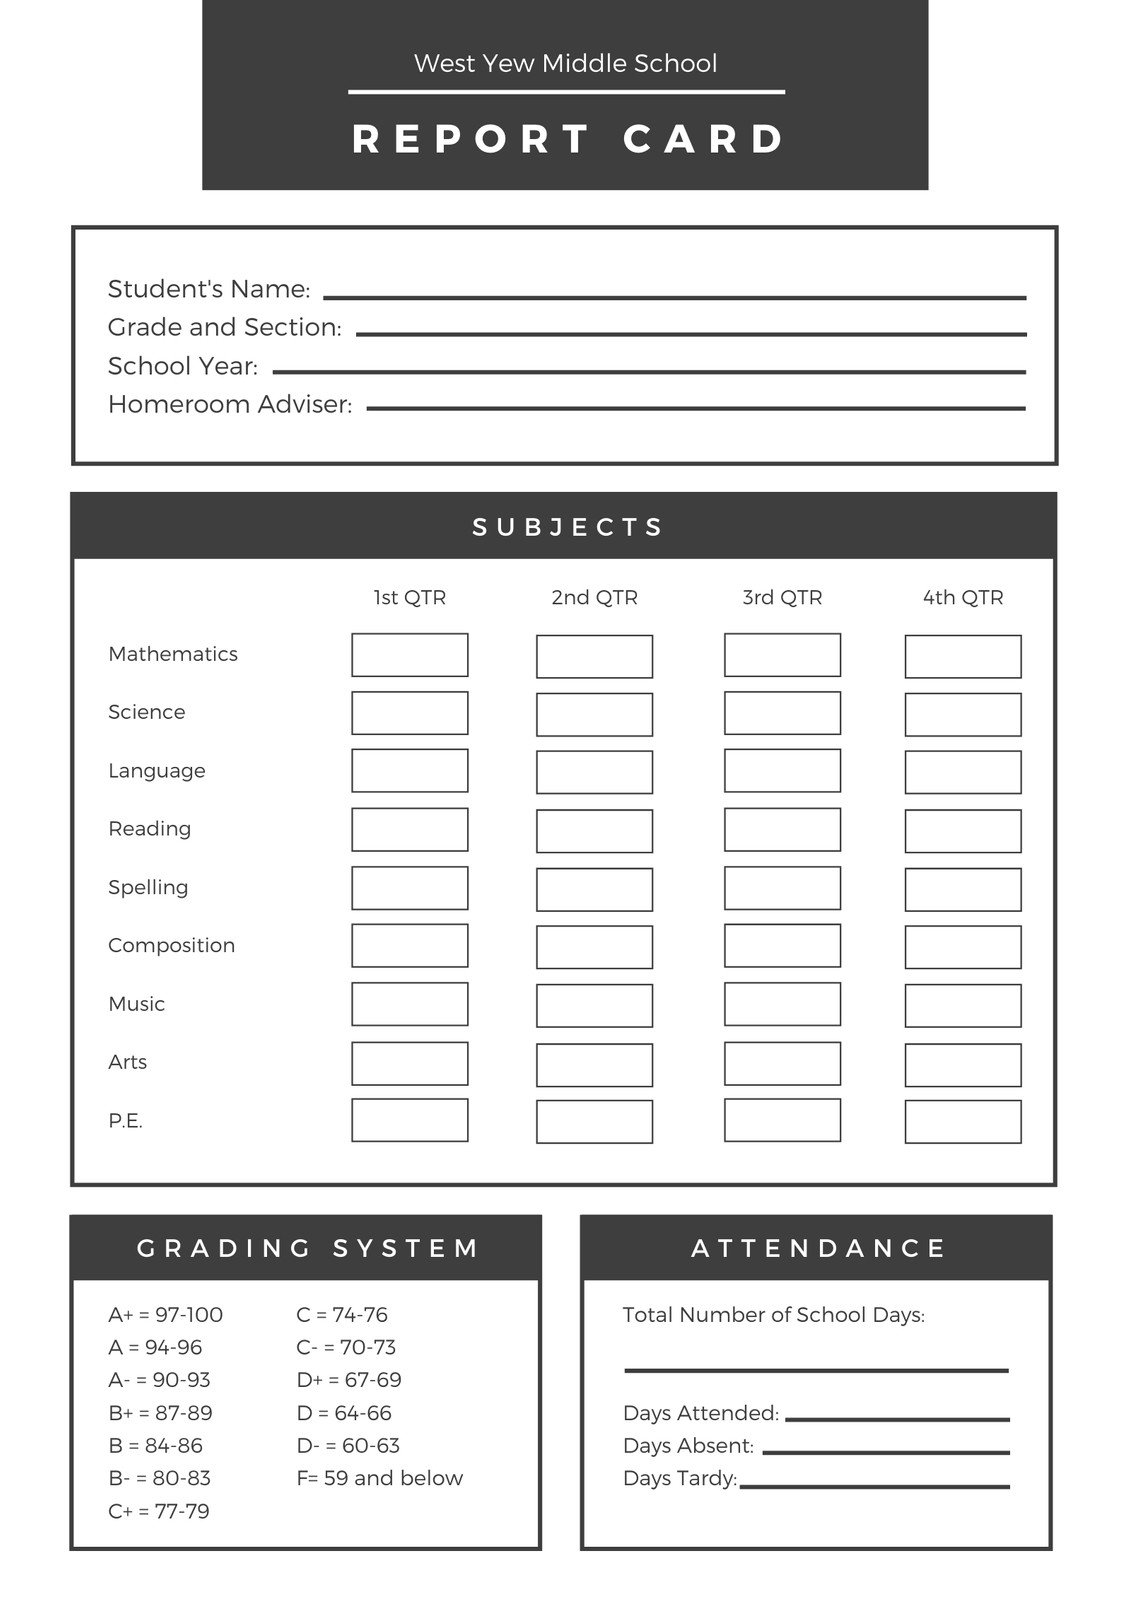 Free, printable, customizable report card templates  Canva Regarding Report Card Template Pdf